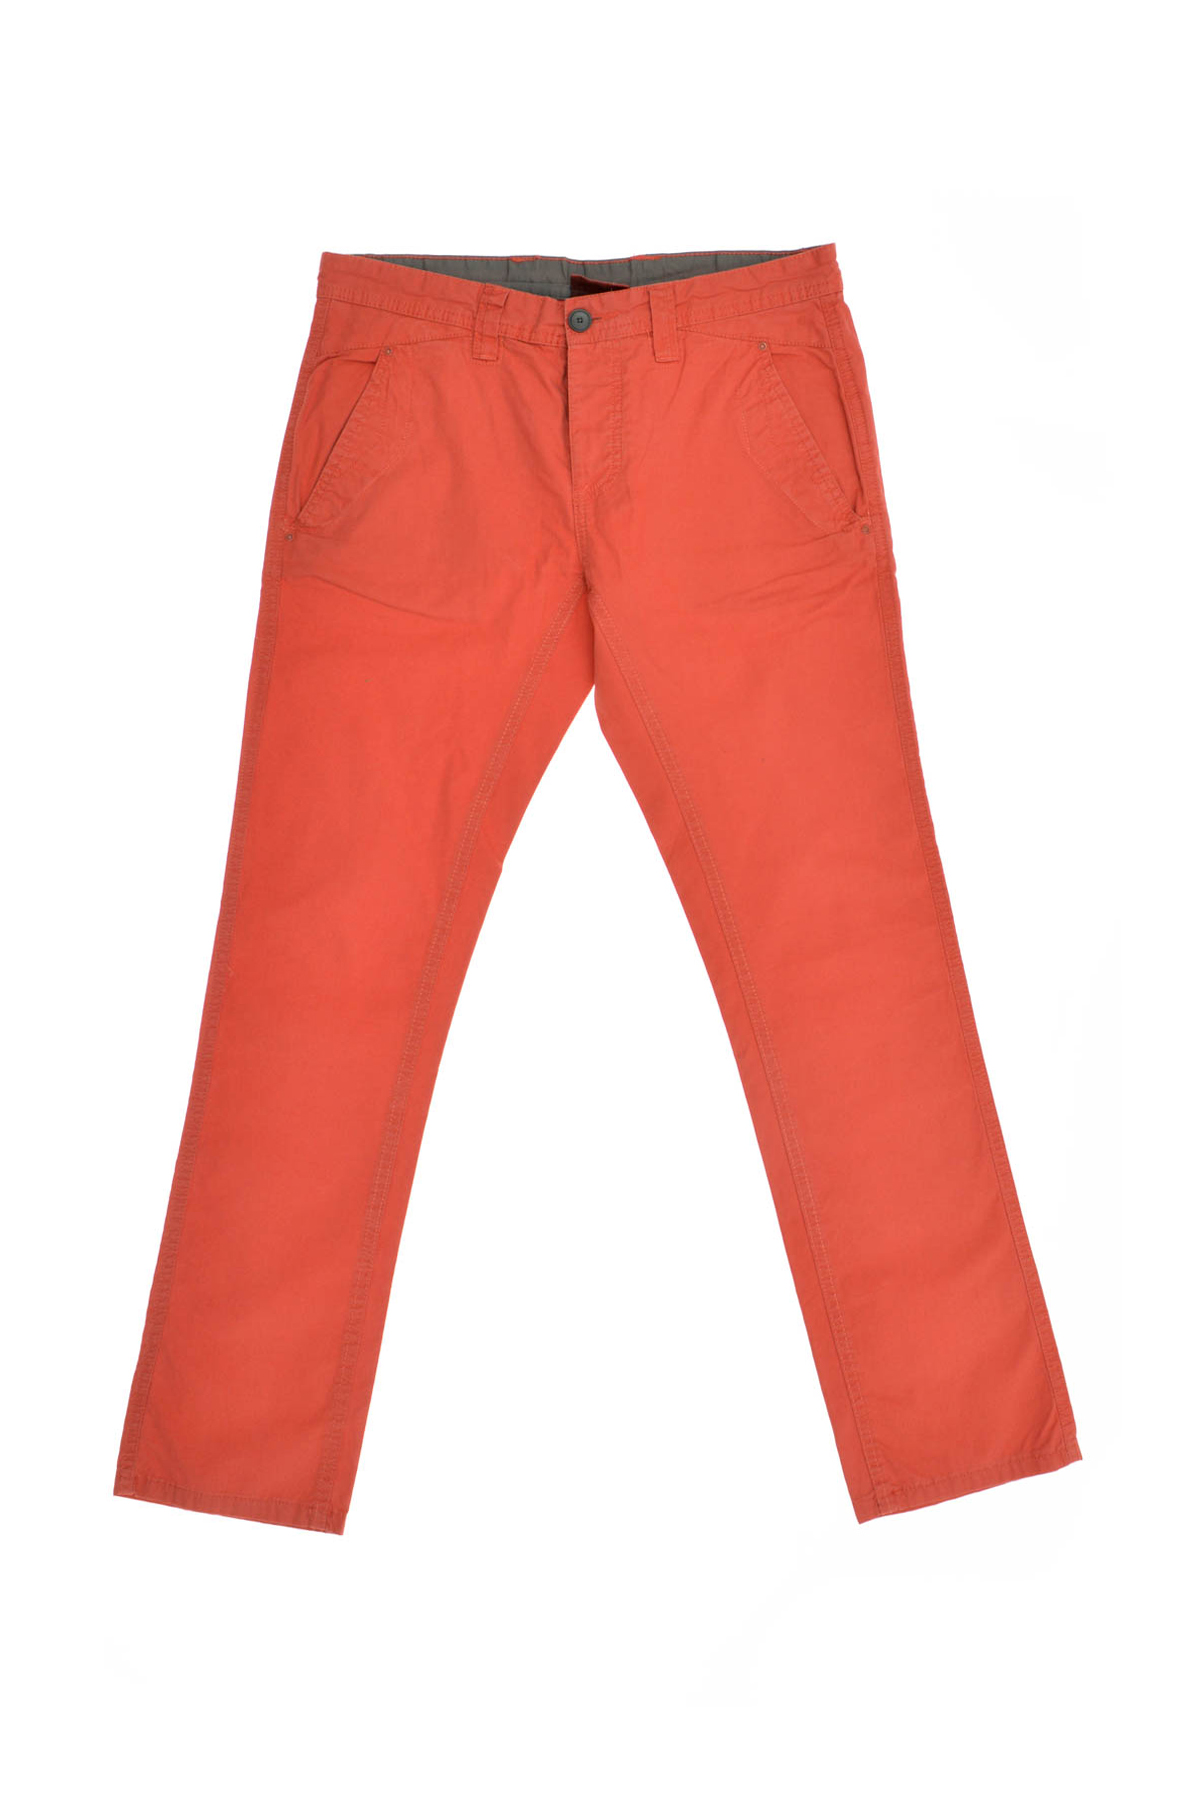 Men's trousers - Identic - 0